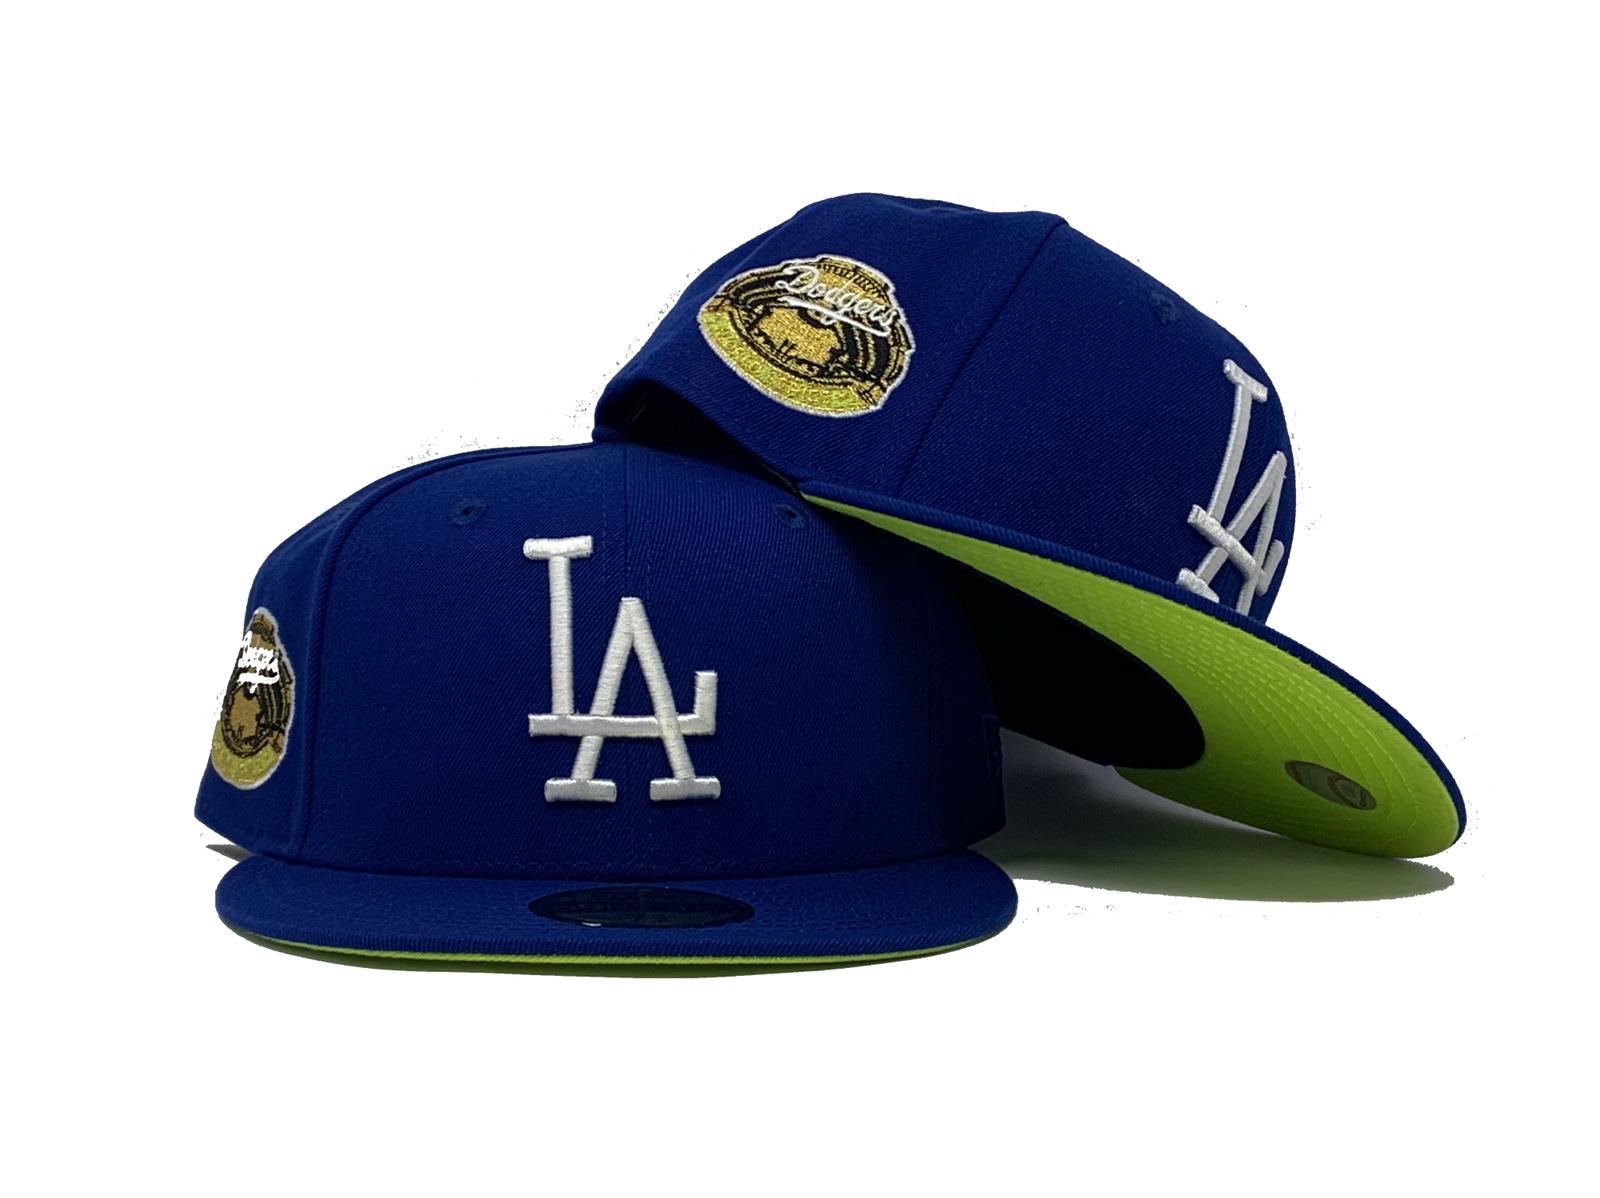 LA Dodgers MLB World Series Green 59FIFTY Cap